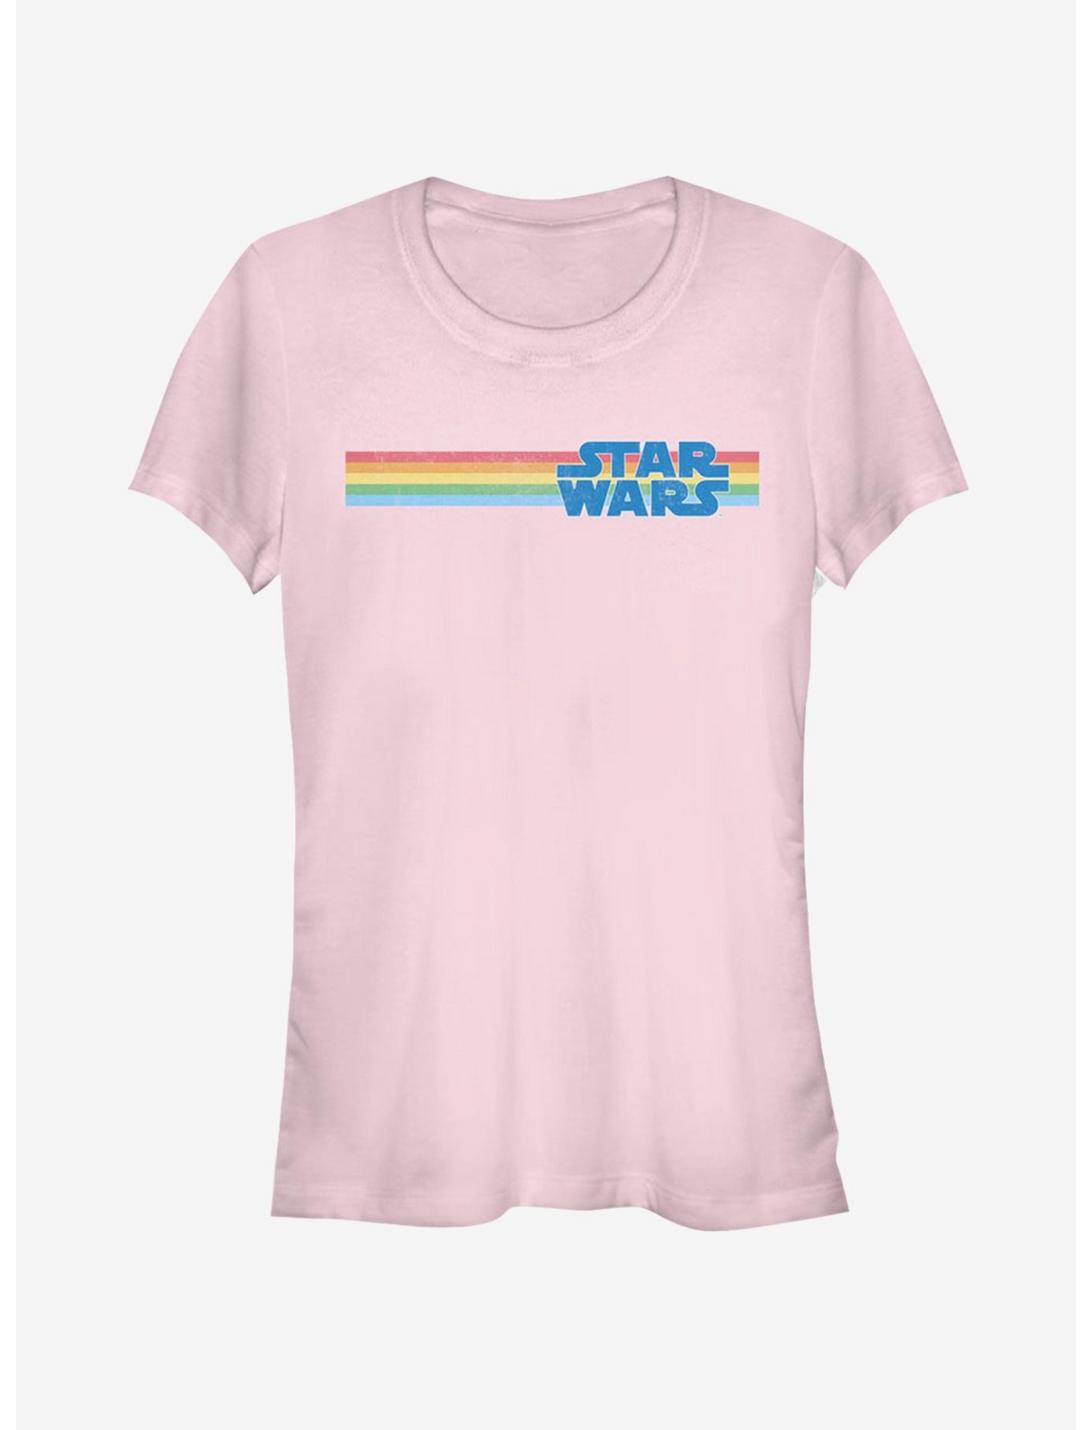 Star Wars Star Wars Logo Multi Stripe Spot Girls T-Shirt, LIGHT PINK, hi-res